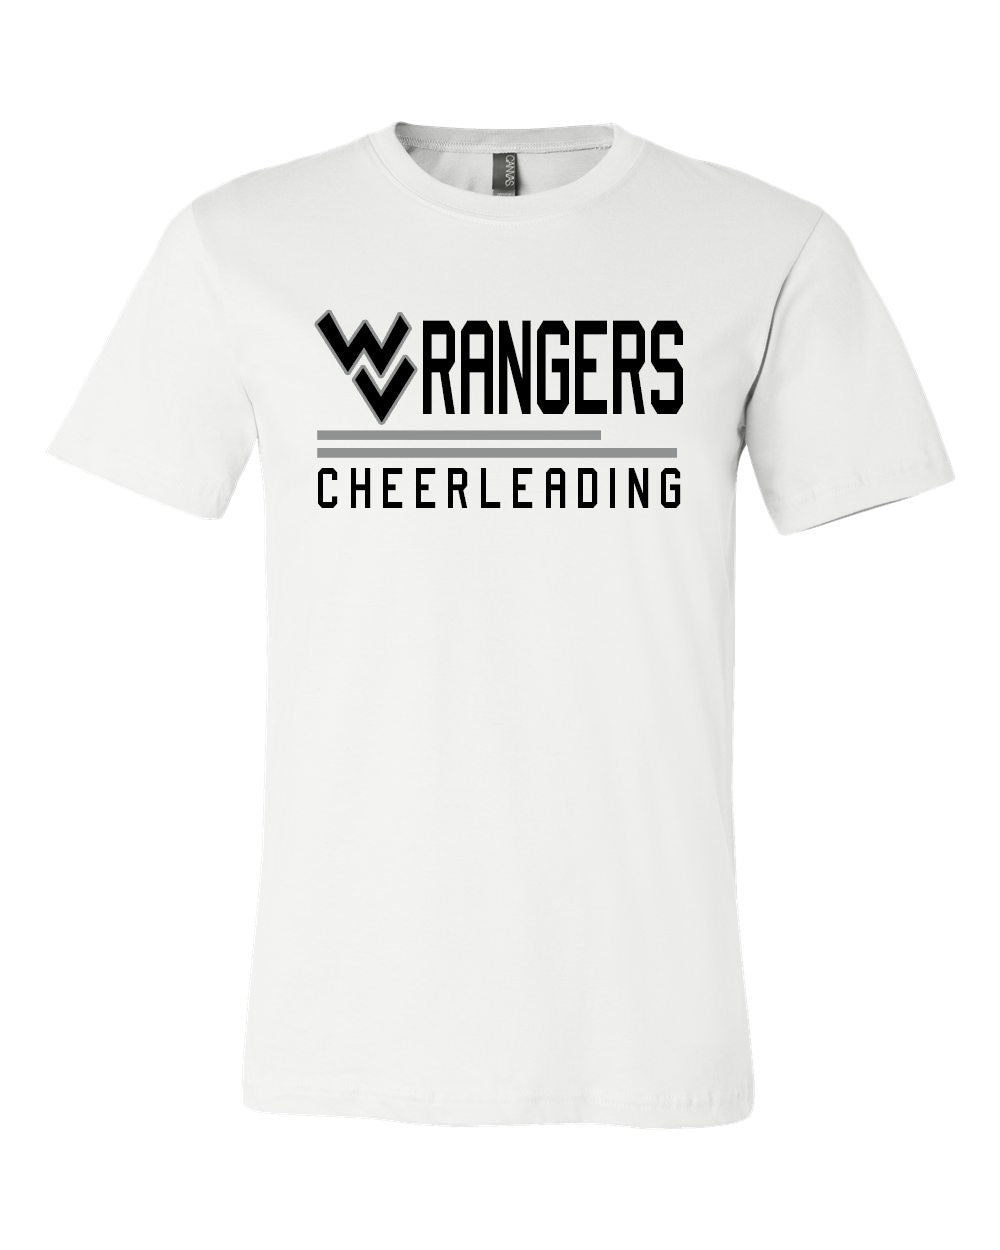 Wallkill Cheer design 2 T-Shirt